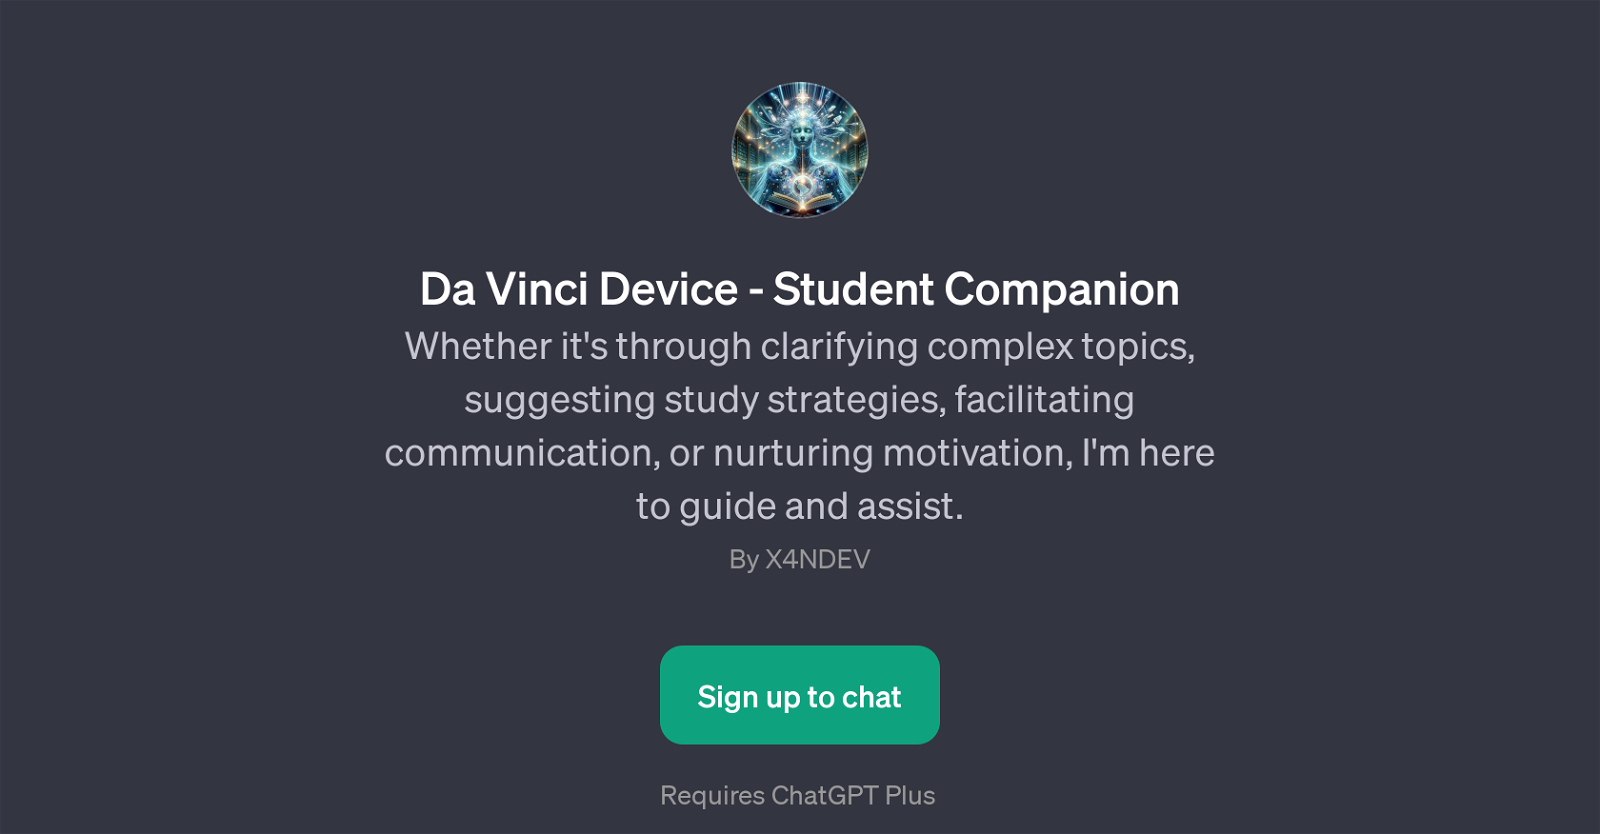 Da Vinci Device - Student Companion website